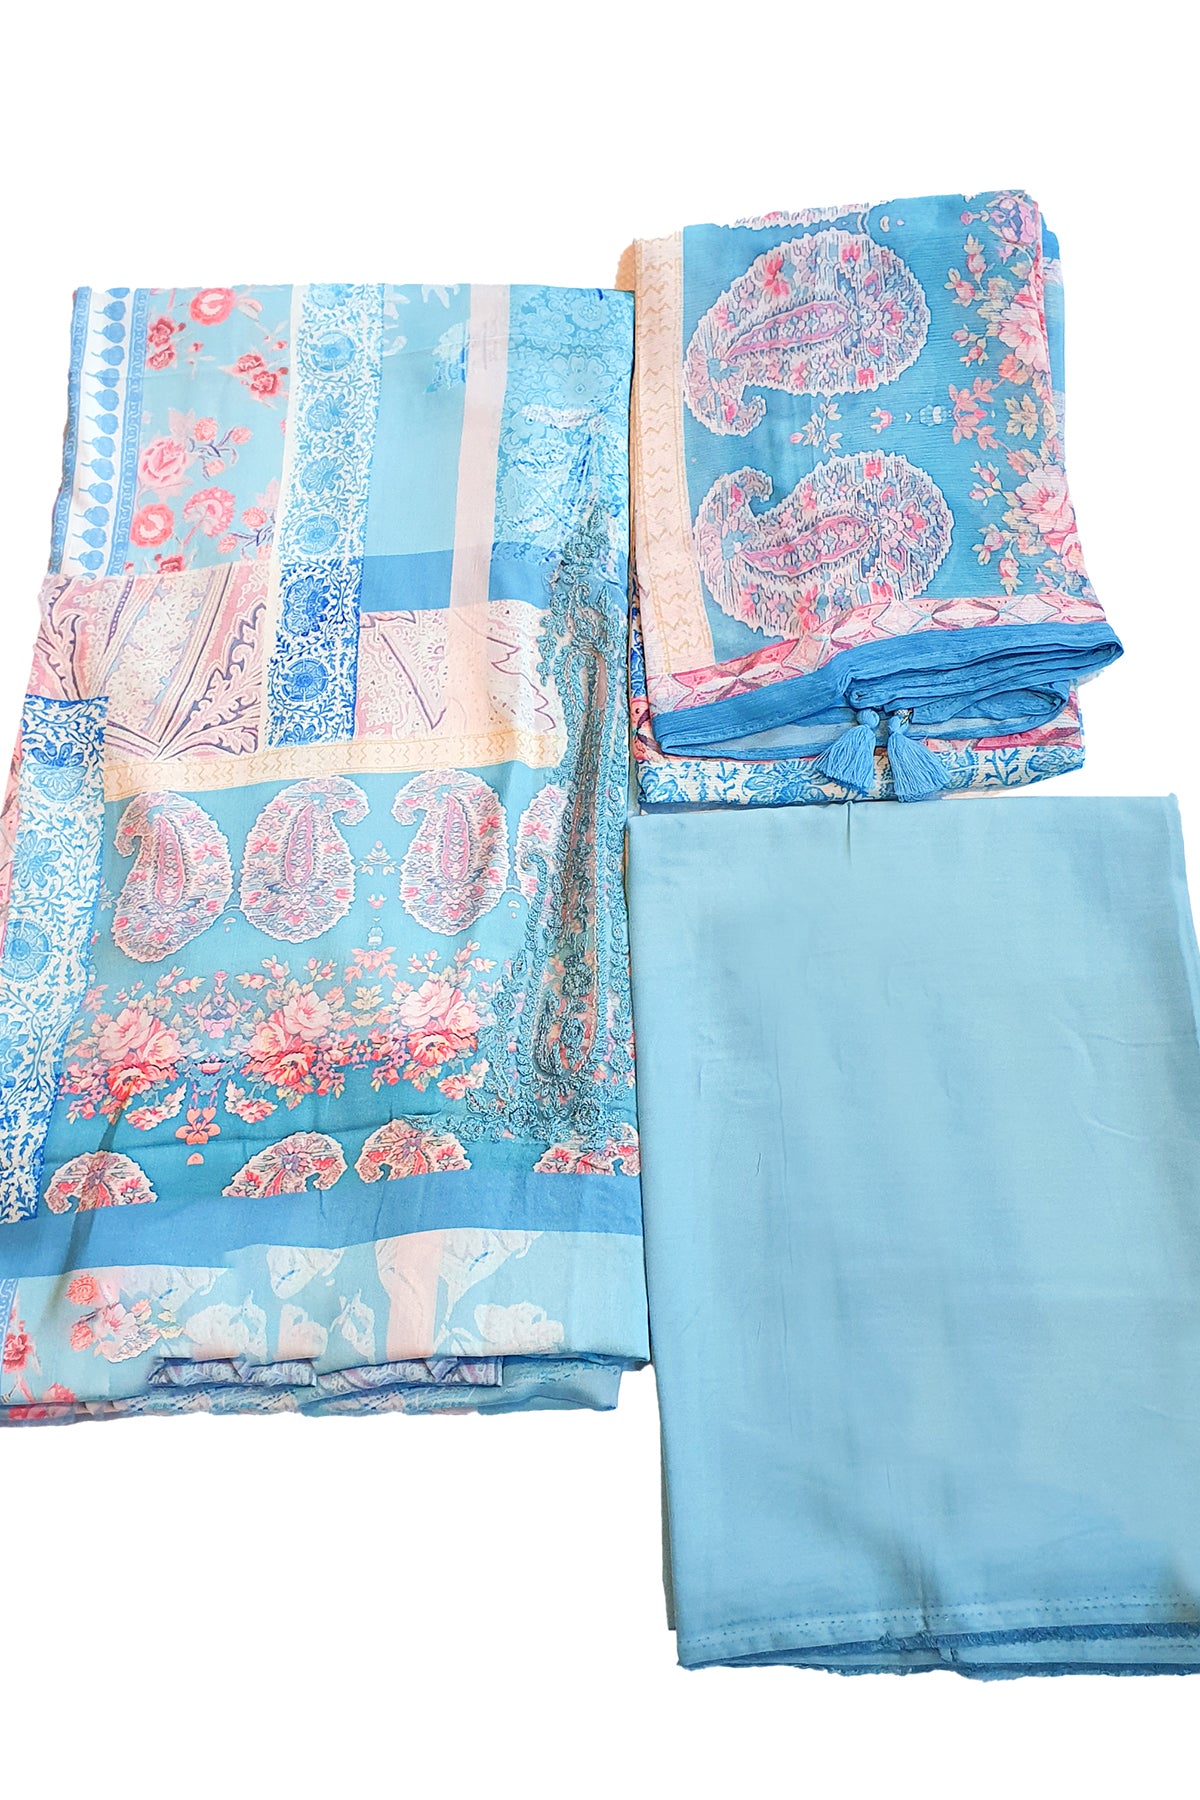 Firozi Modal Satin Printed Threadwork and Zari Embroidered Suit Set